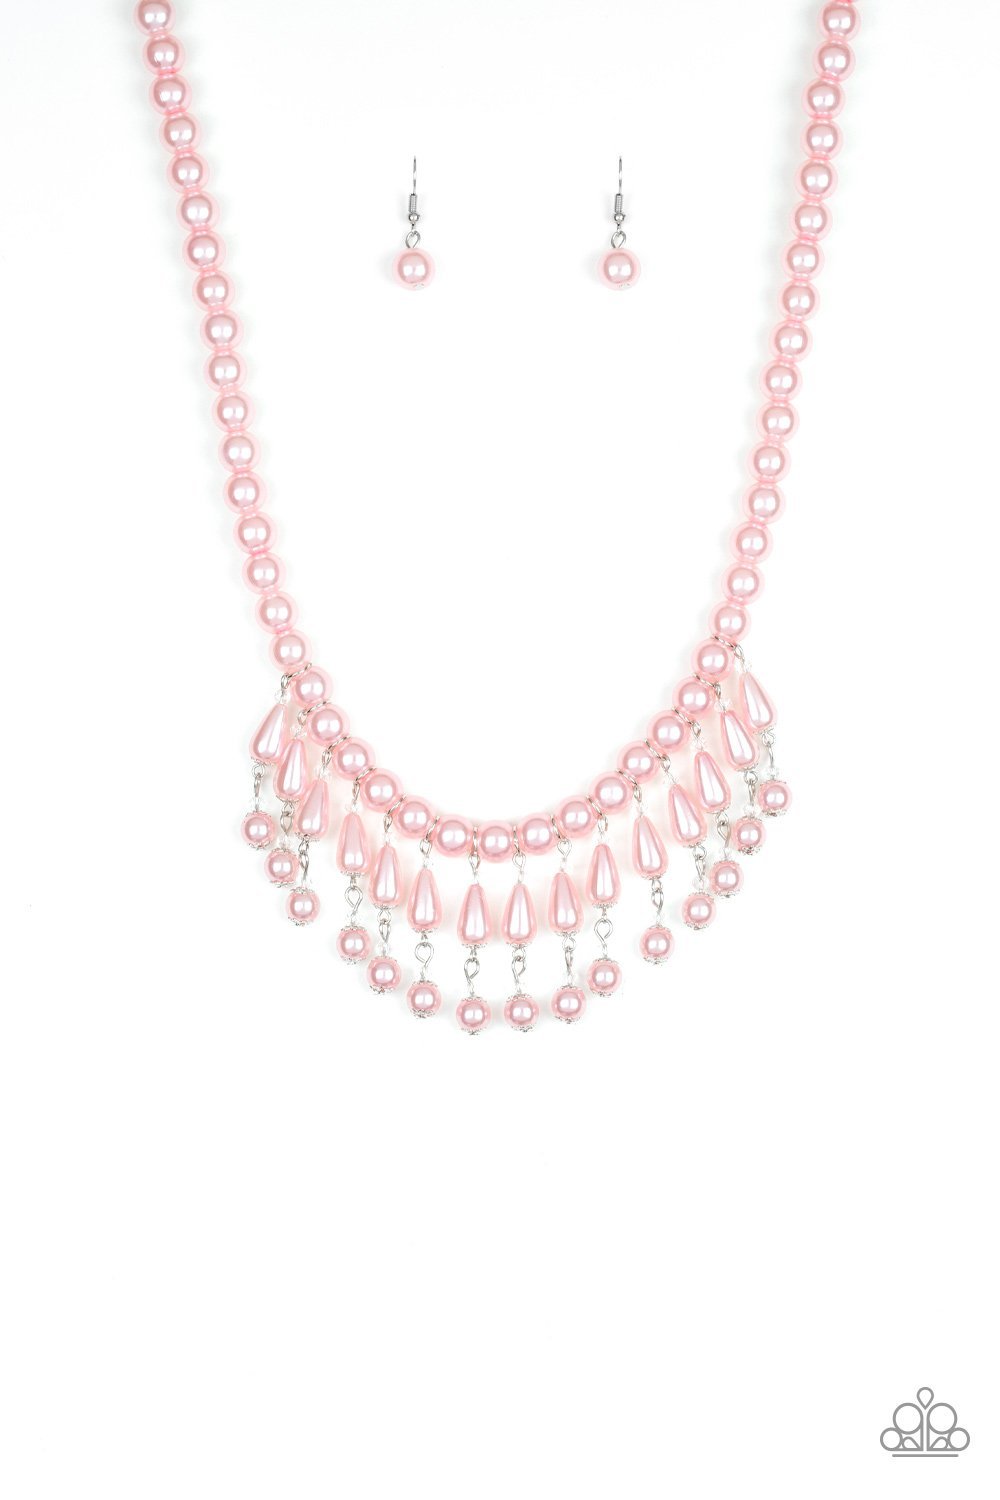 Paparazzi Necklace - Fabulously Floral- Pink Pearl Bead- Flower Rhinestone  | eBay